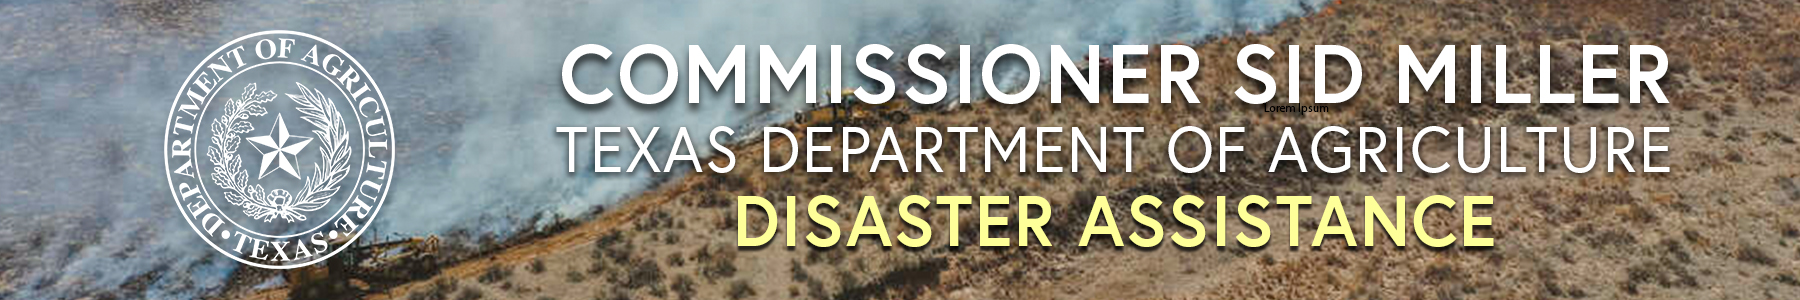 Disaster Assistance Banner 2